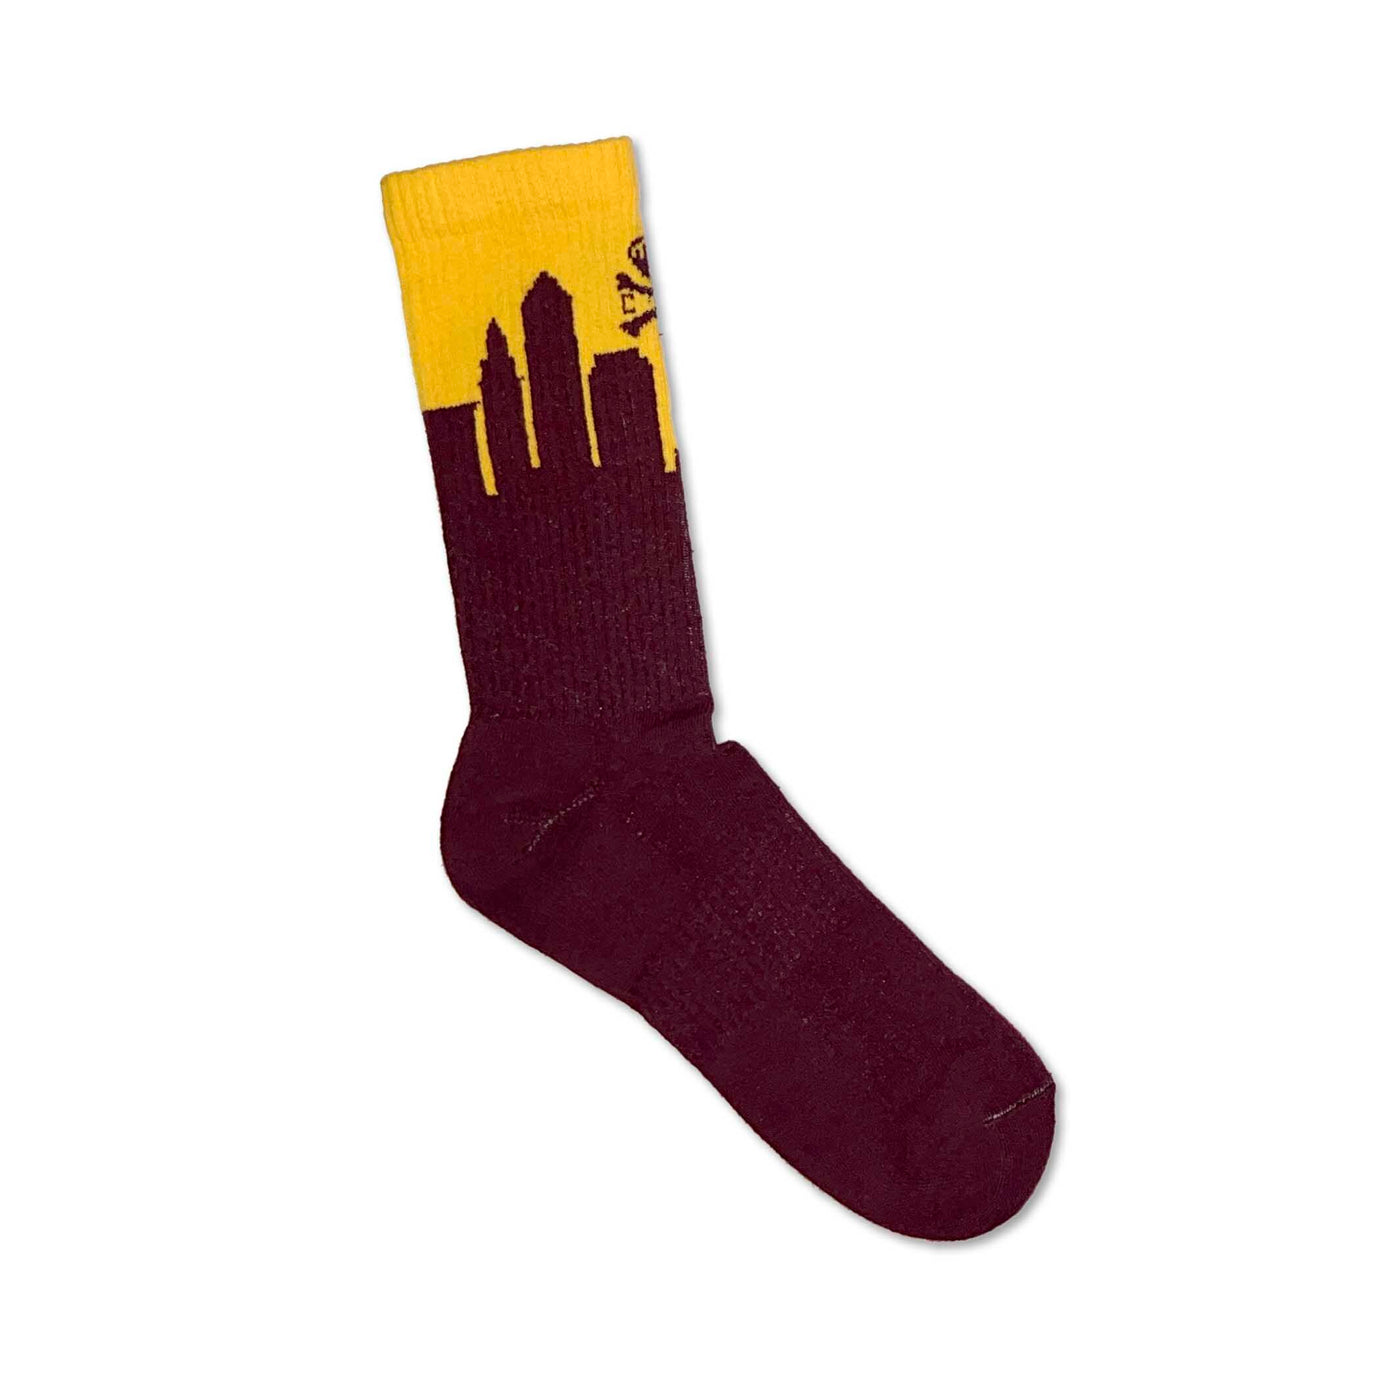 Cleveland Skyline Socks - Wine/Gold